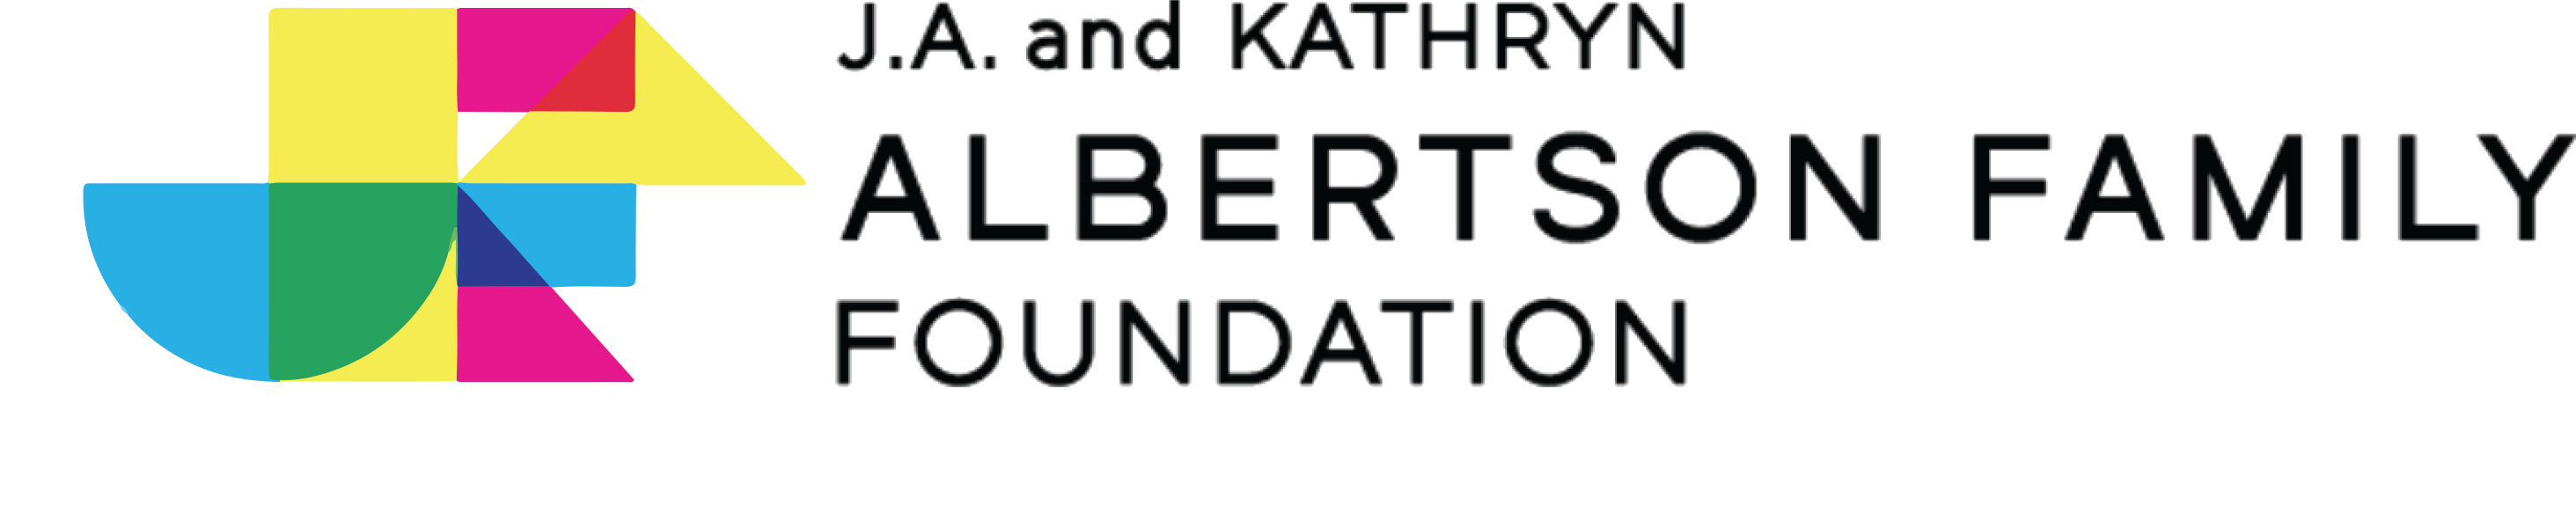 albertson family foundation logo